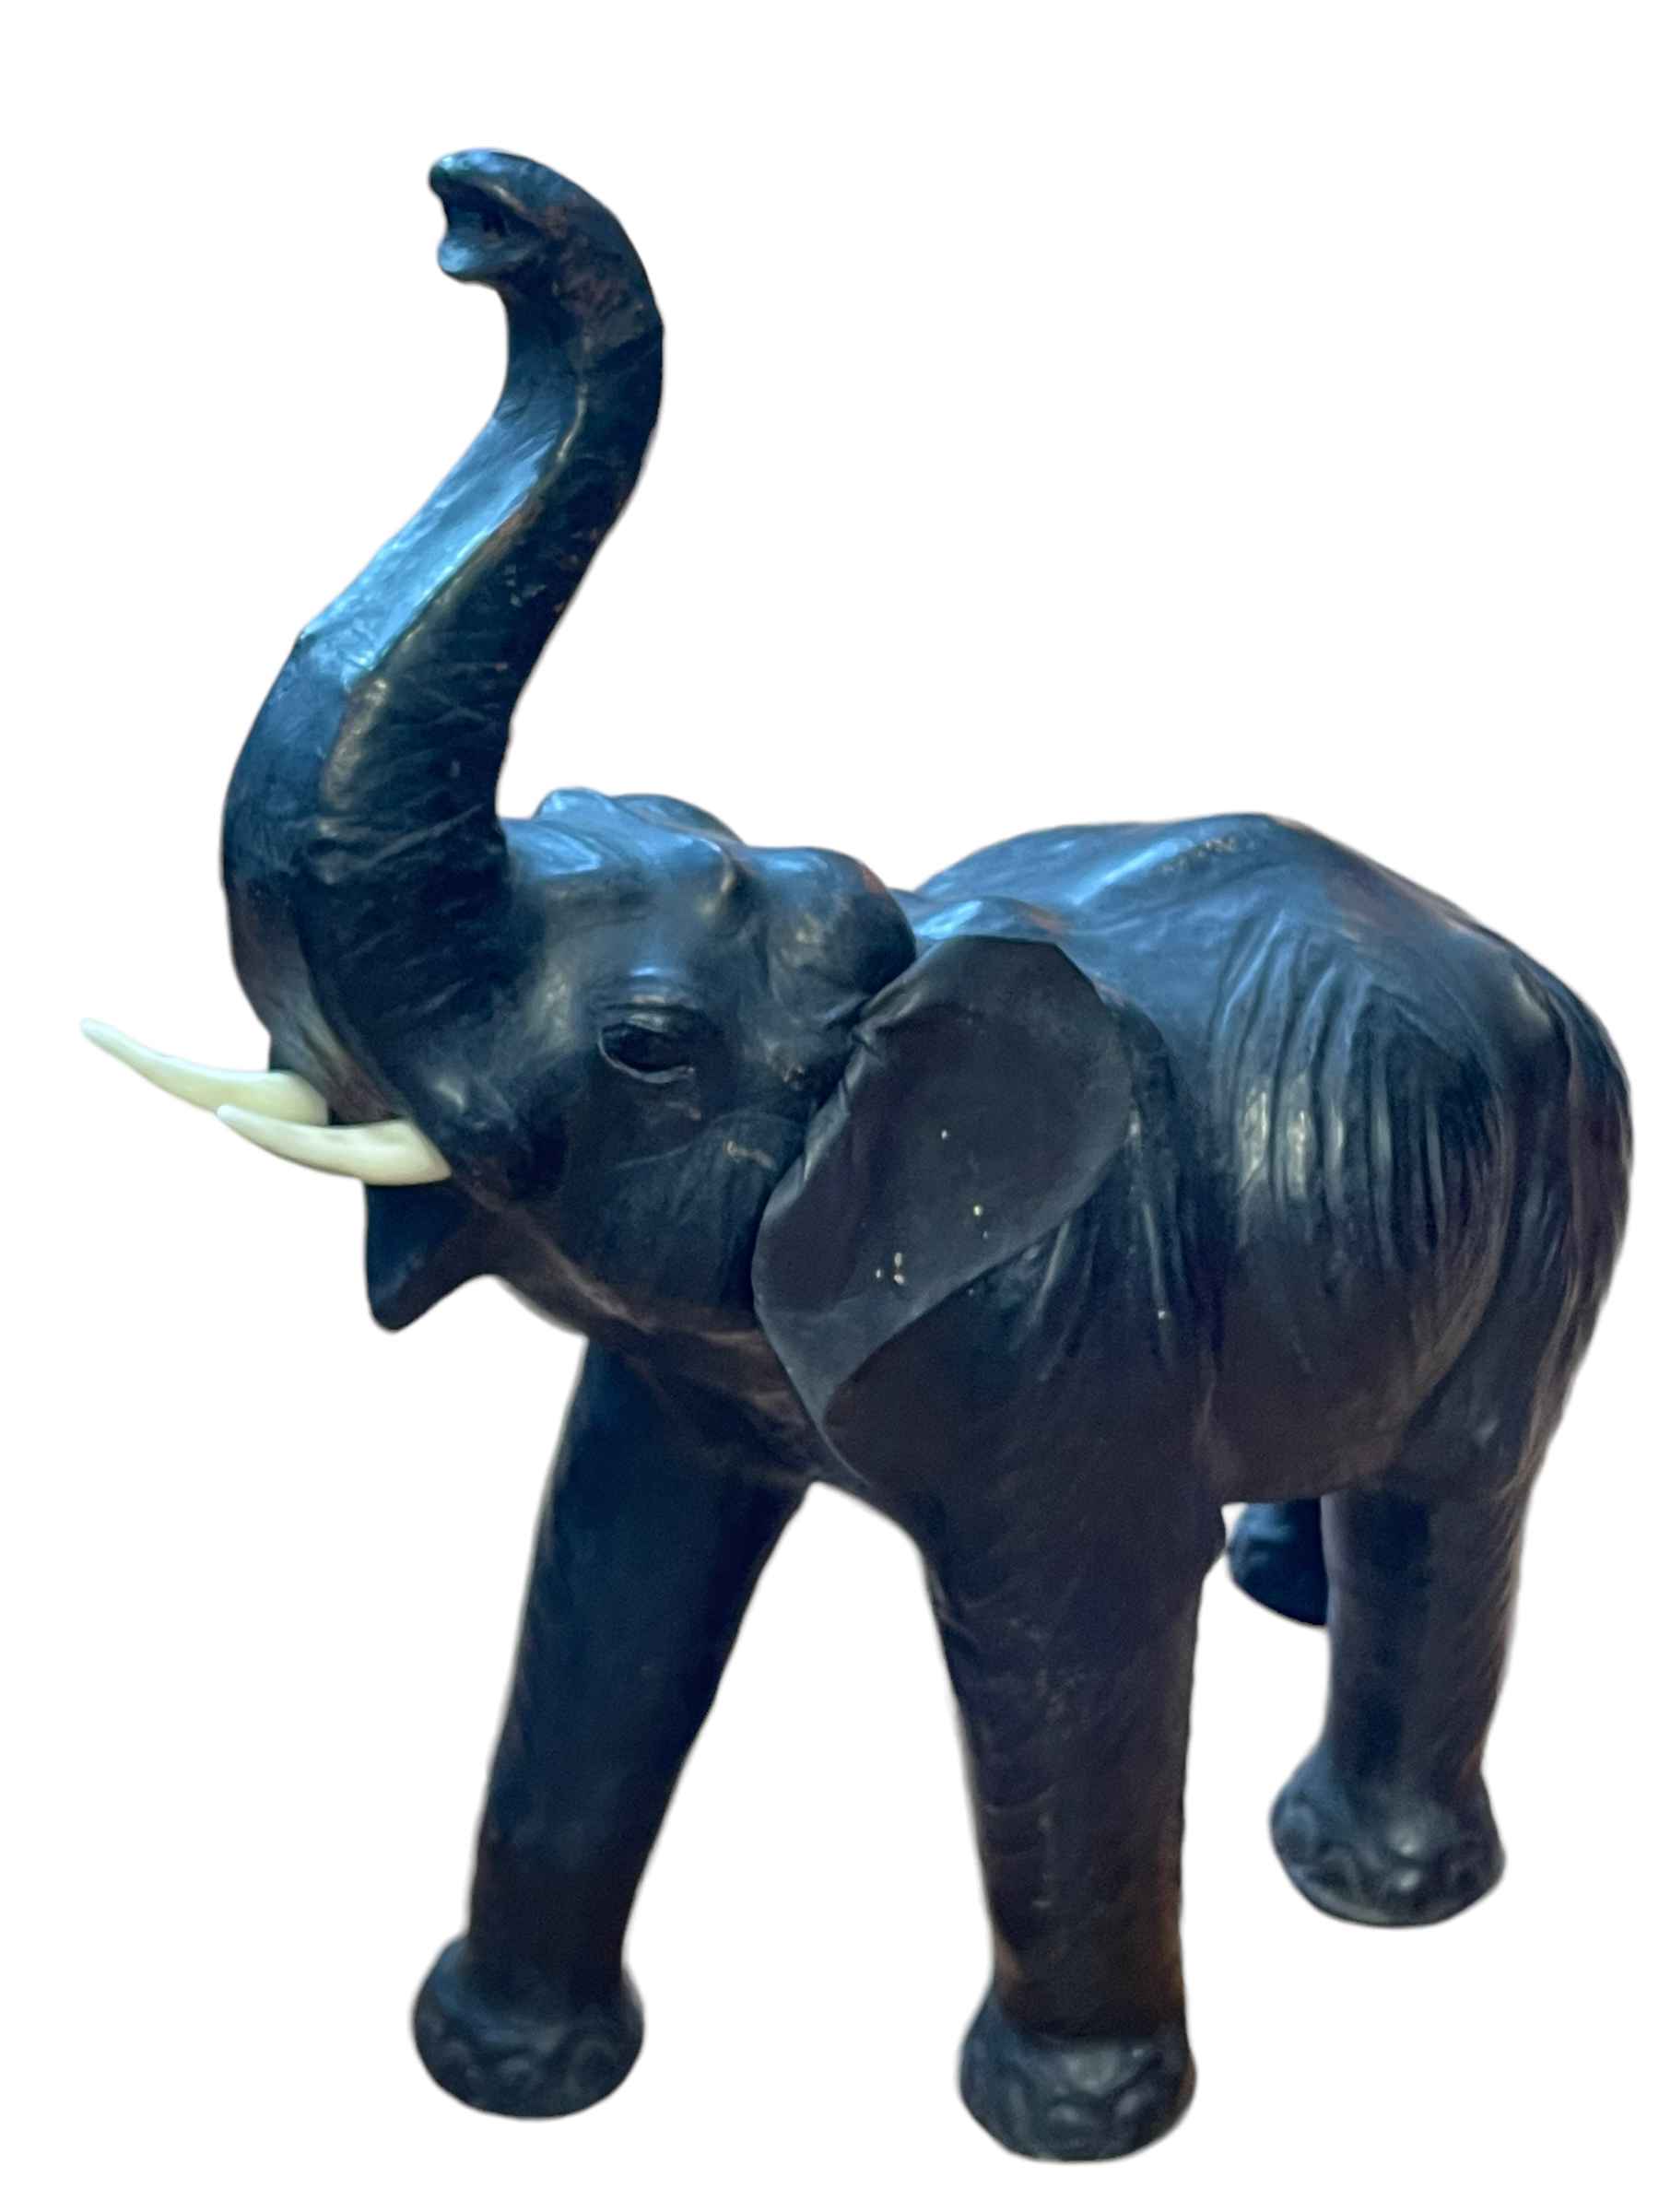 Liberty style leather elephant.